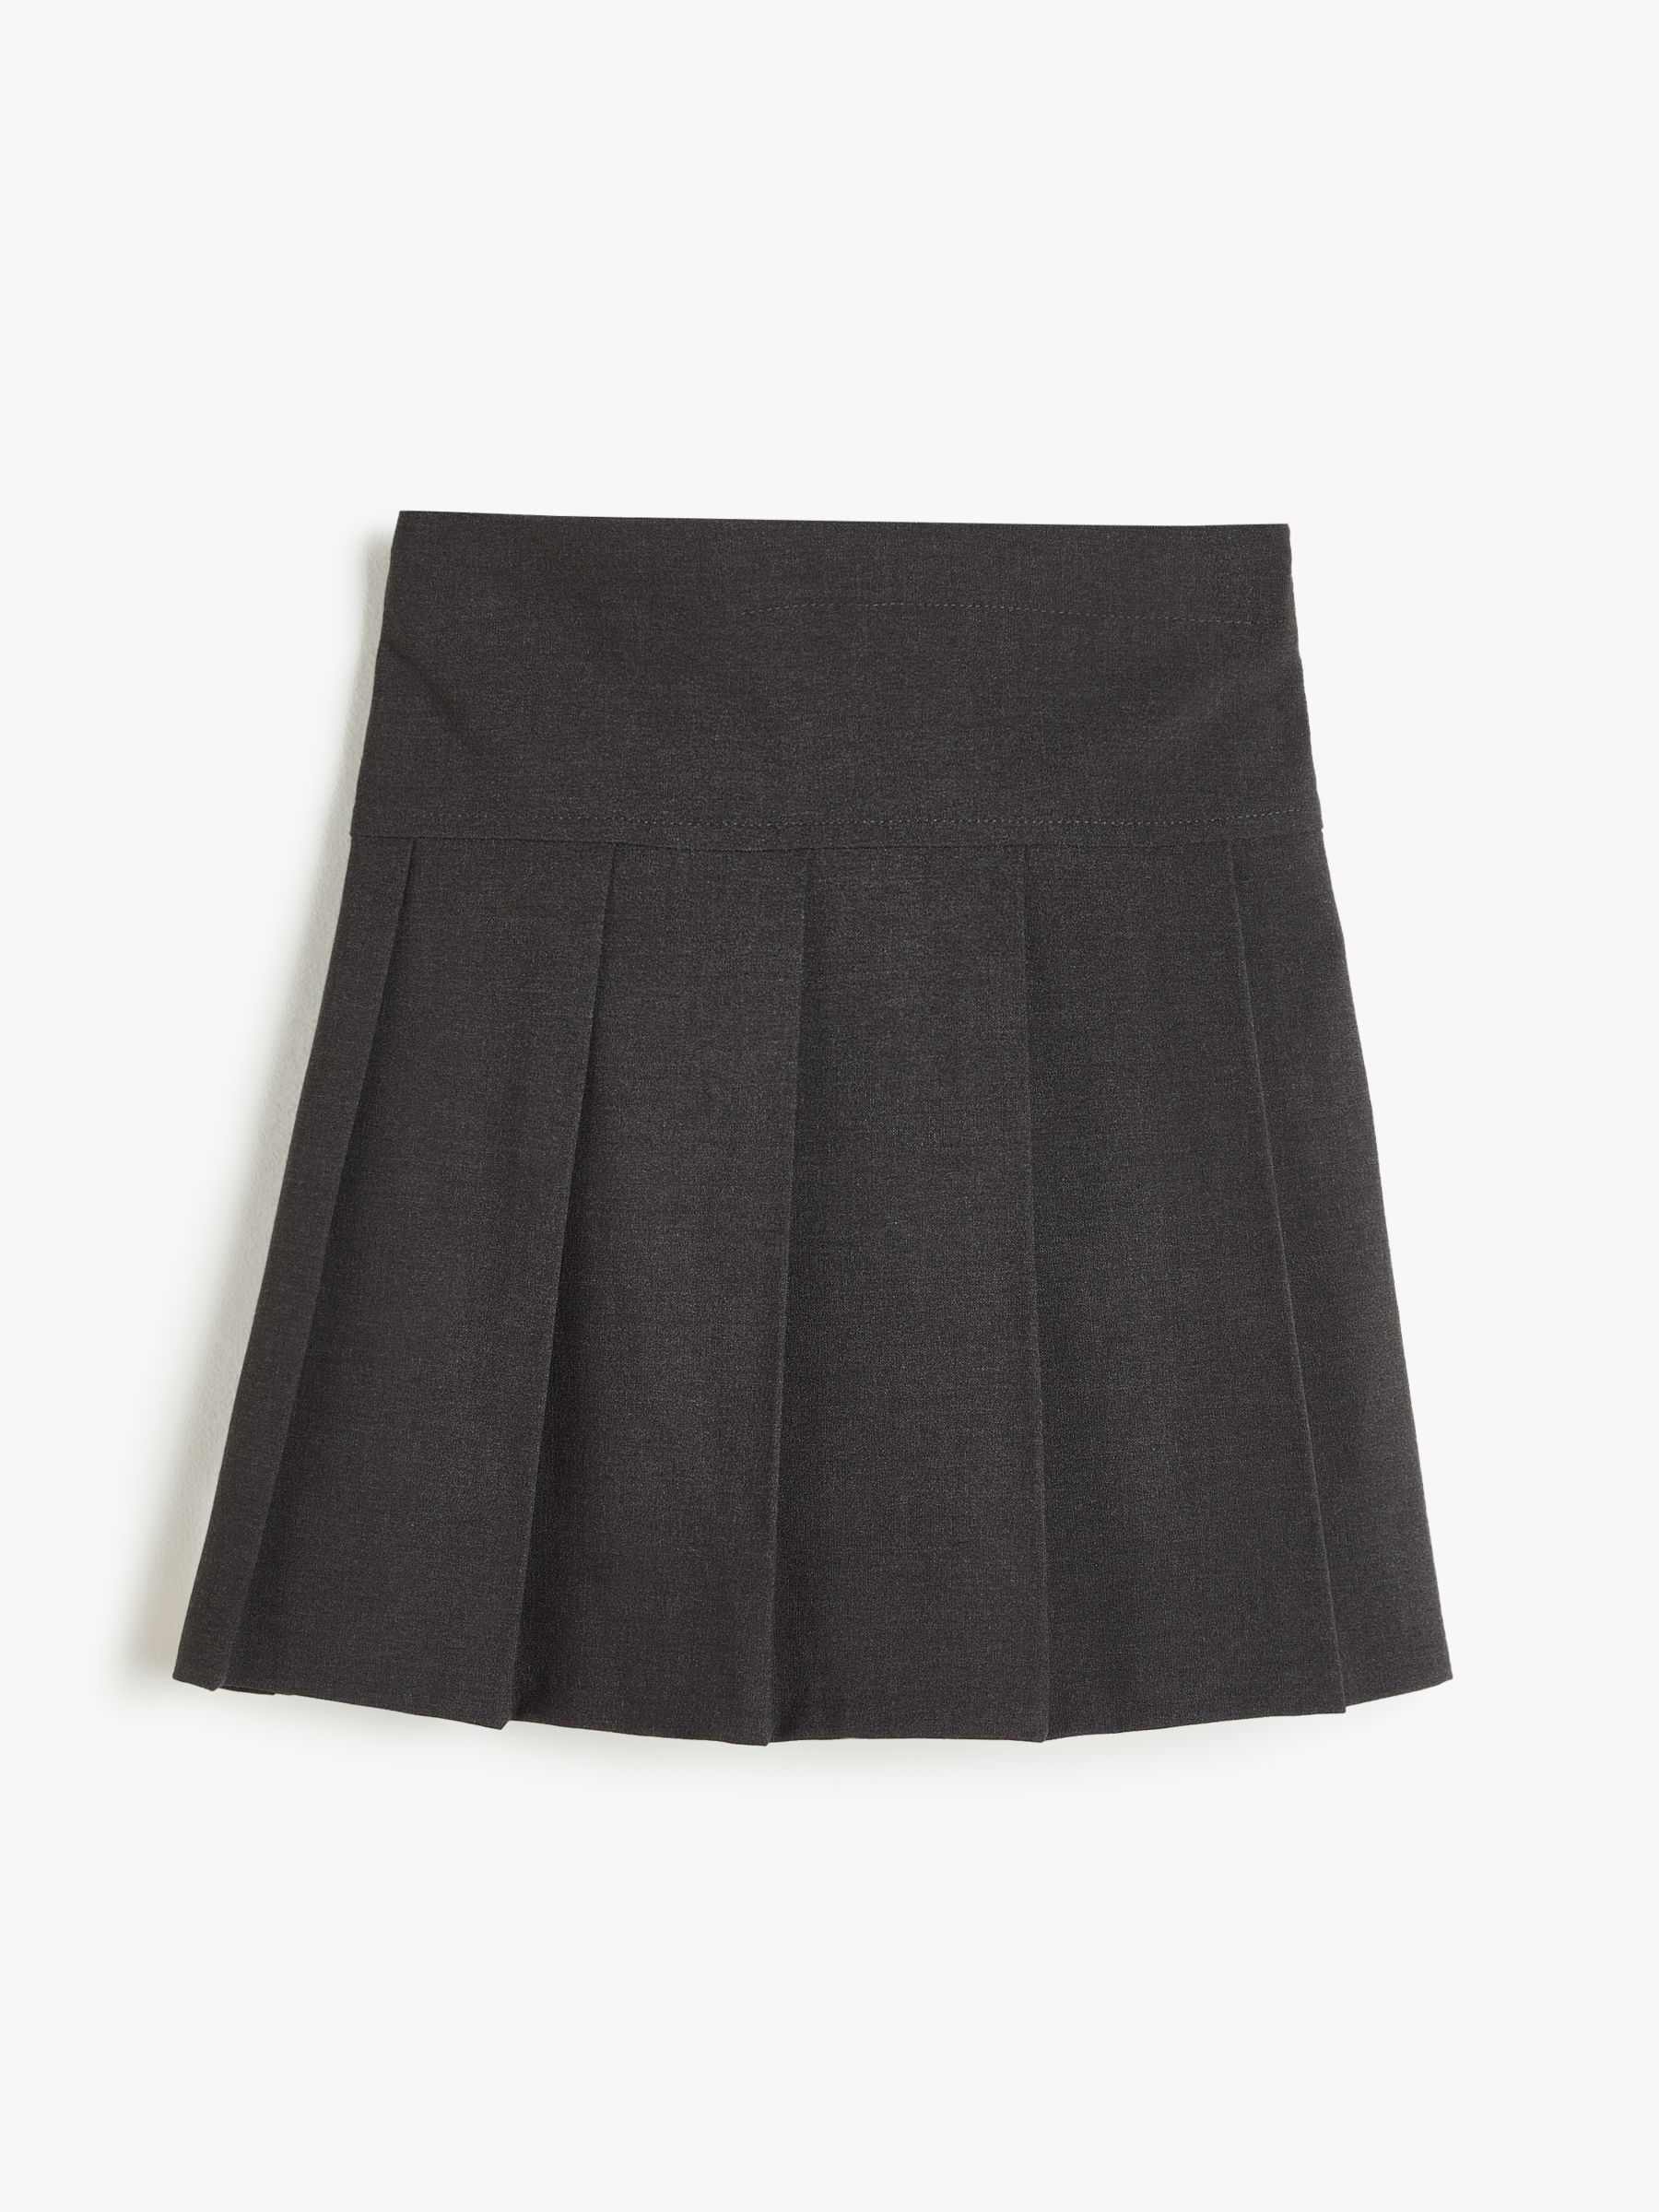 Girls' Black Senior Plus Fit Permanent Pleats School Skirt